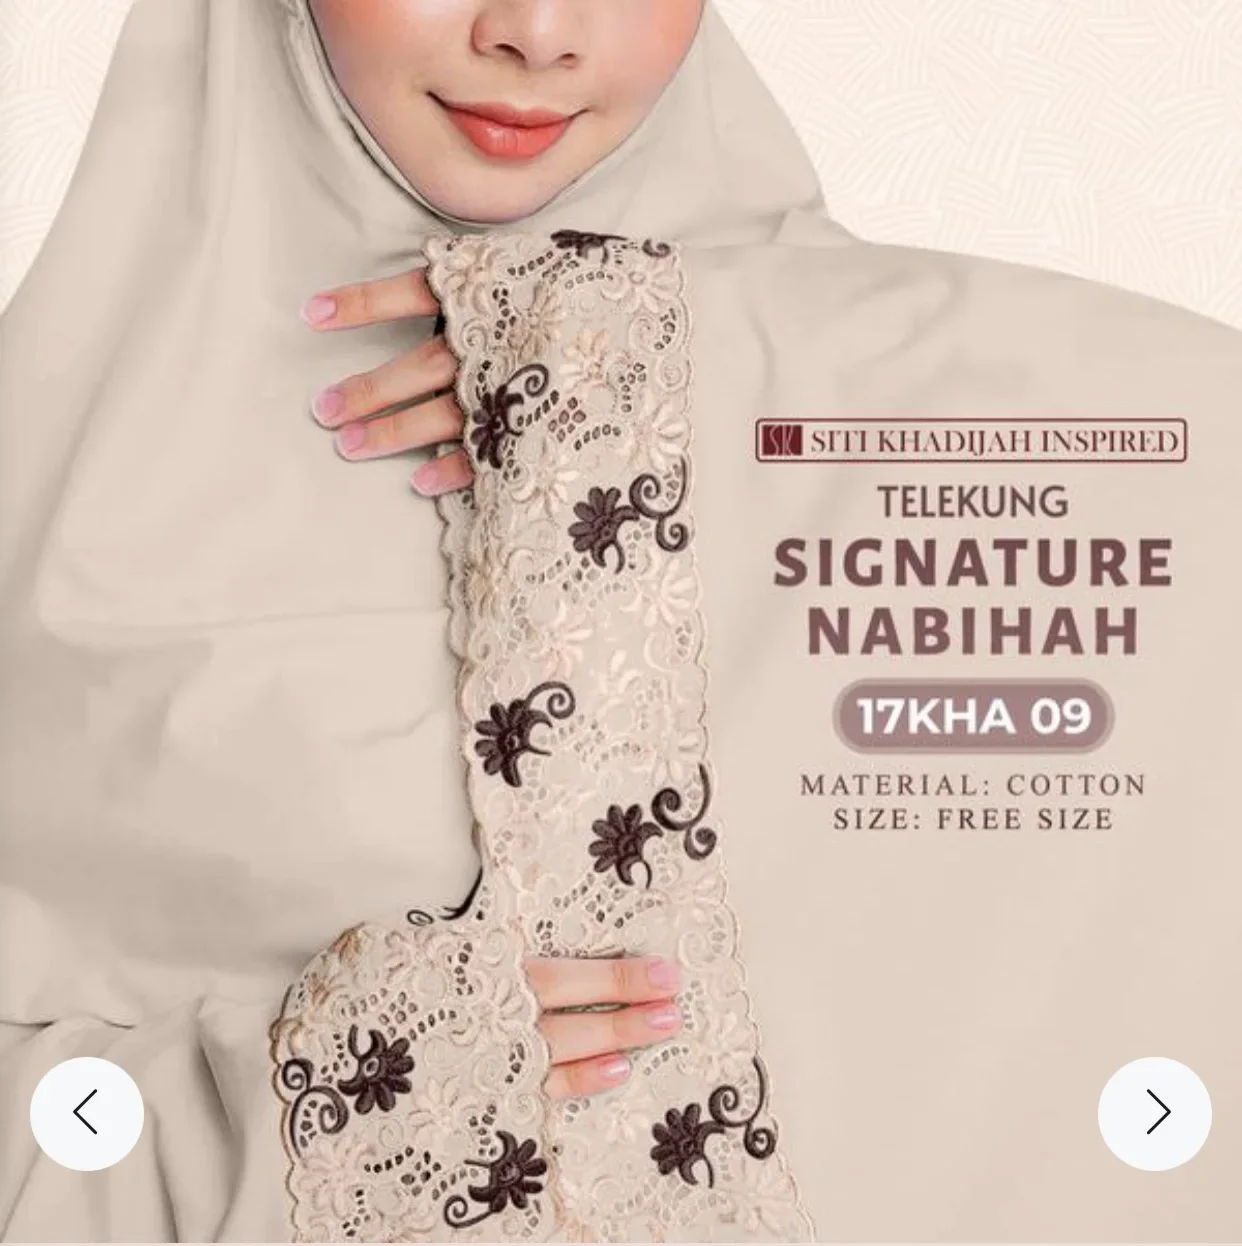 PREORDER Siti Khadijah Signature Nabihah Collection - Free Woven Bag